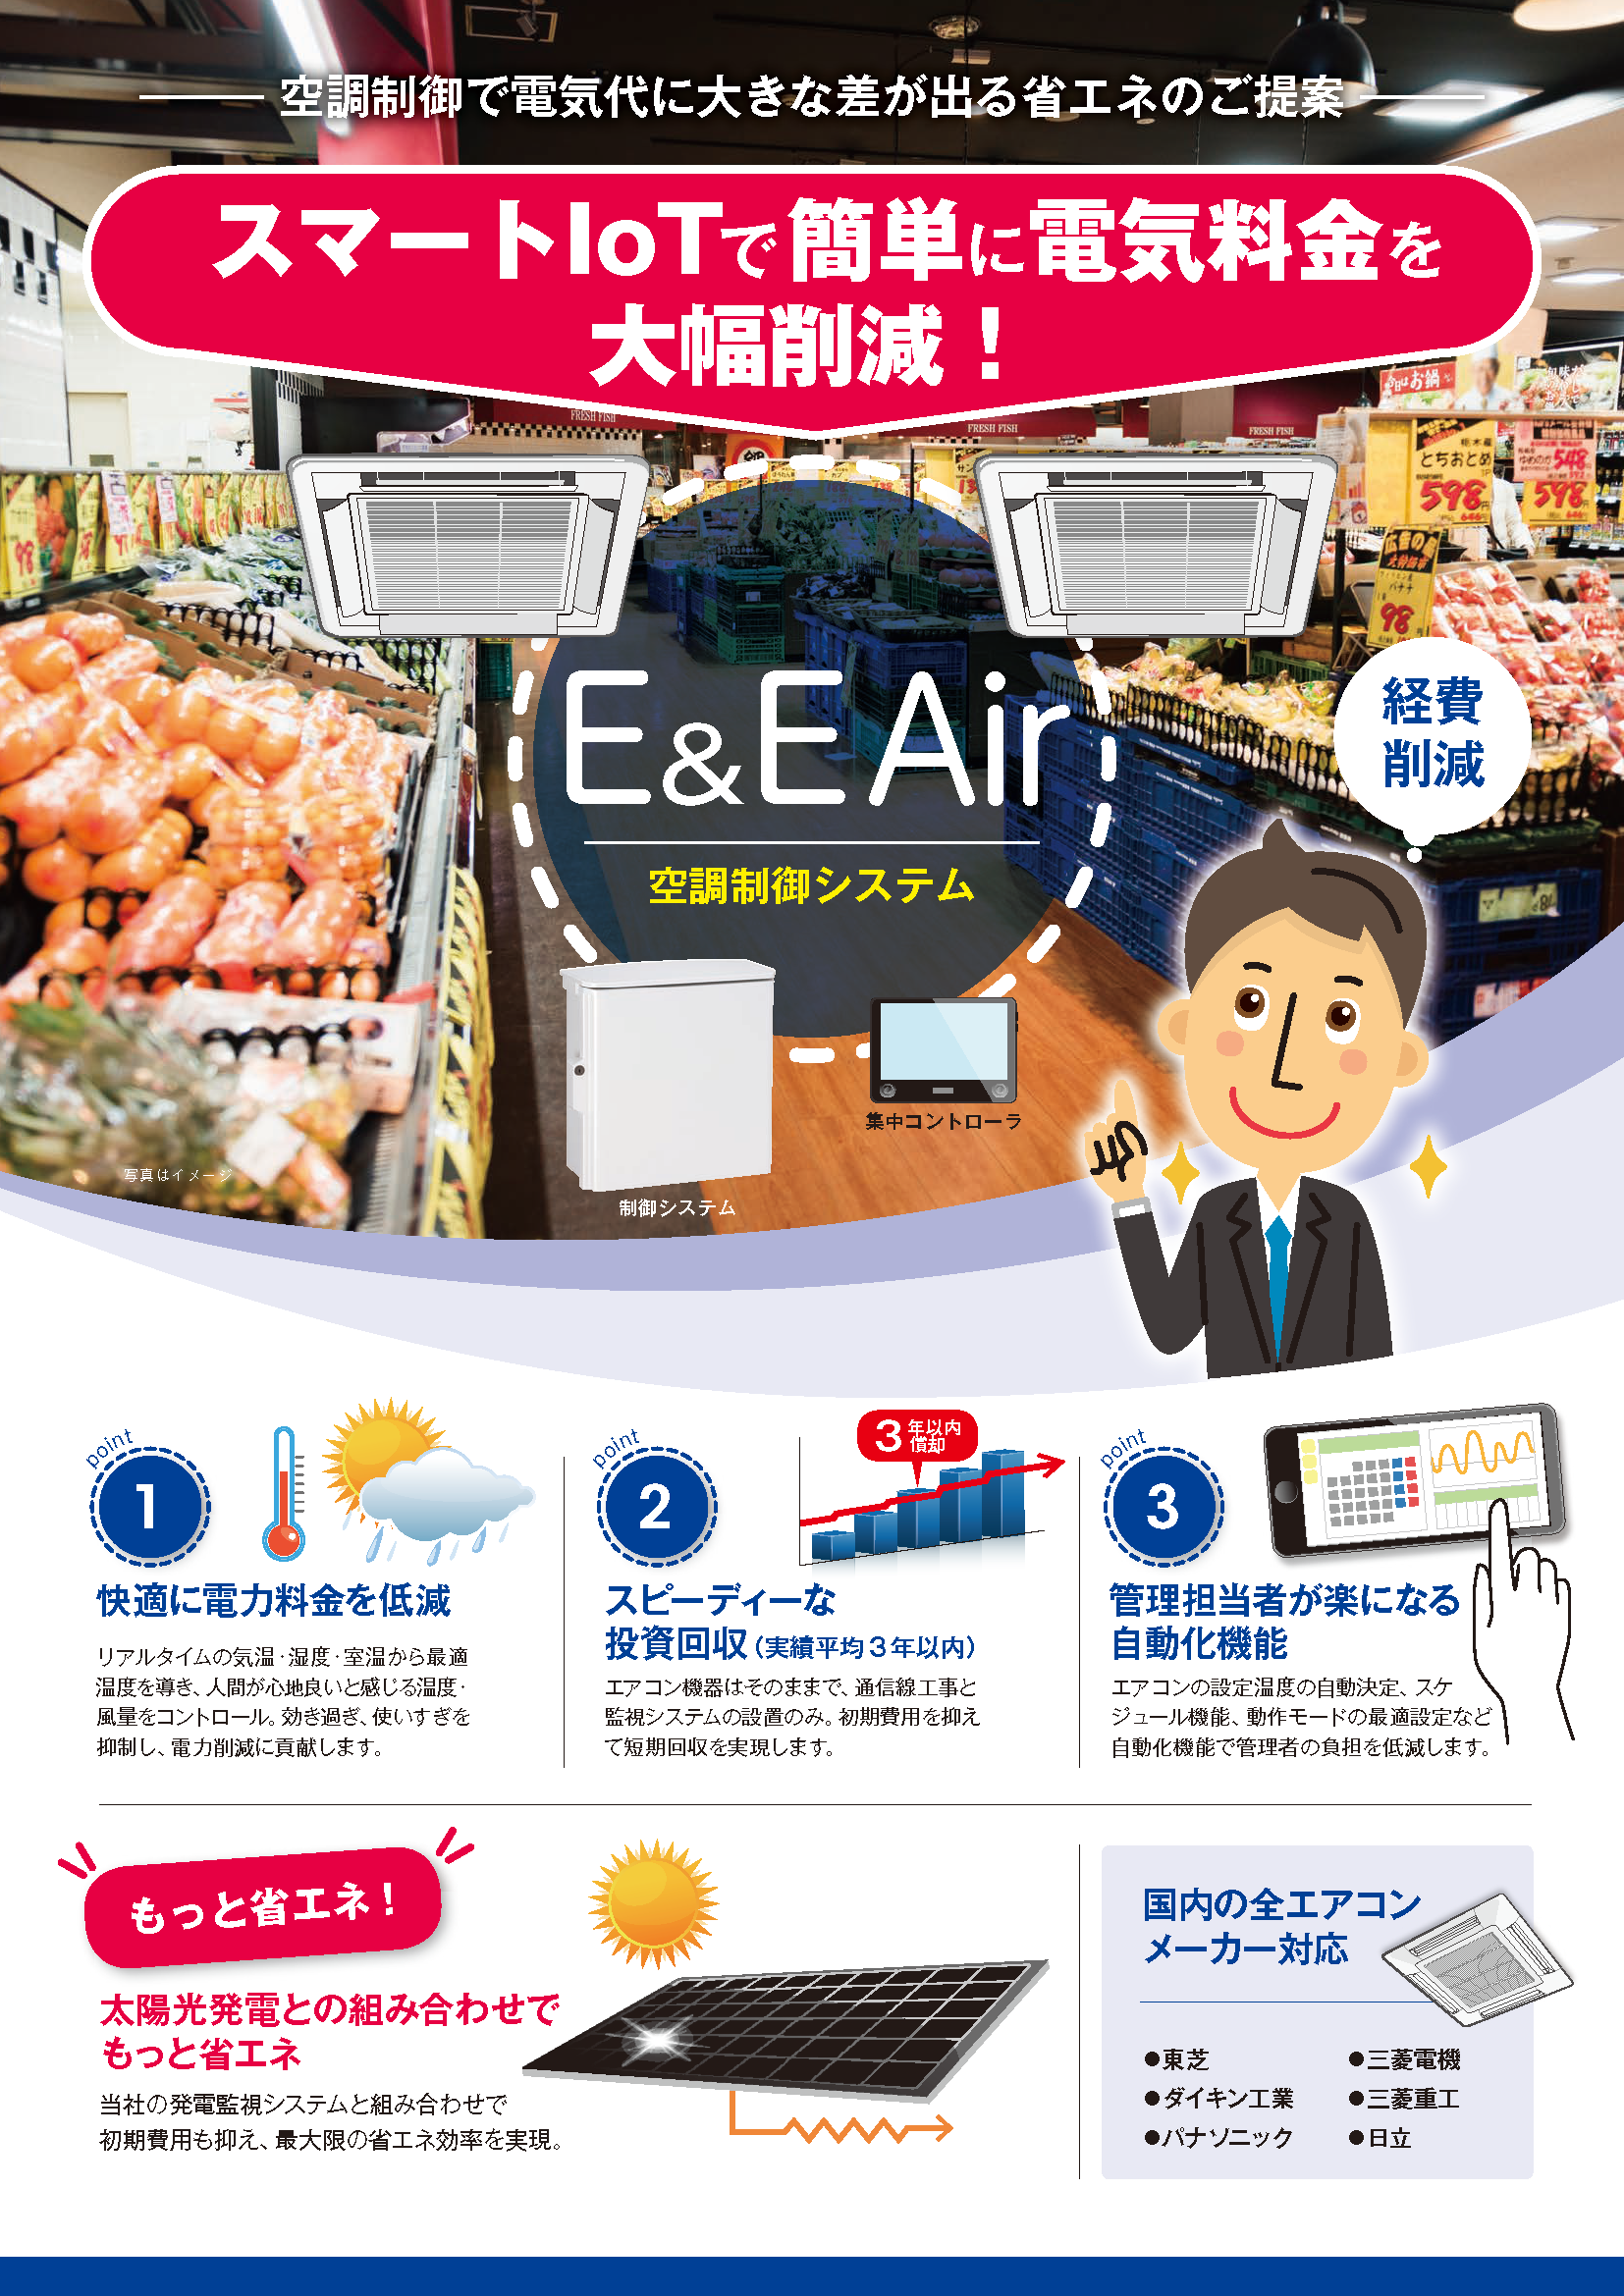 E&E Air: Air Conditioning Control Systems